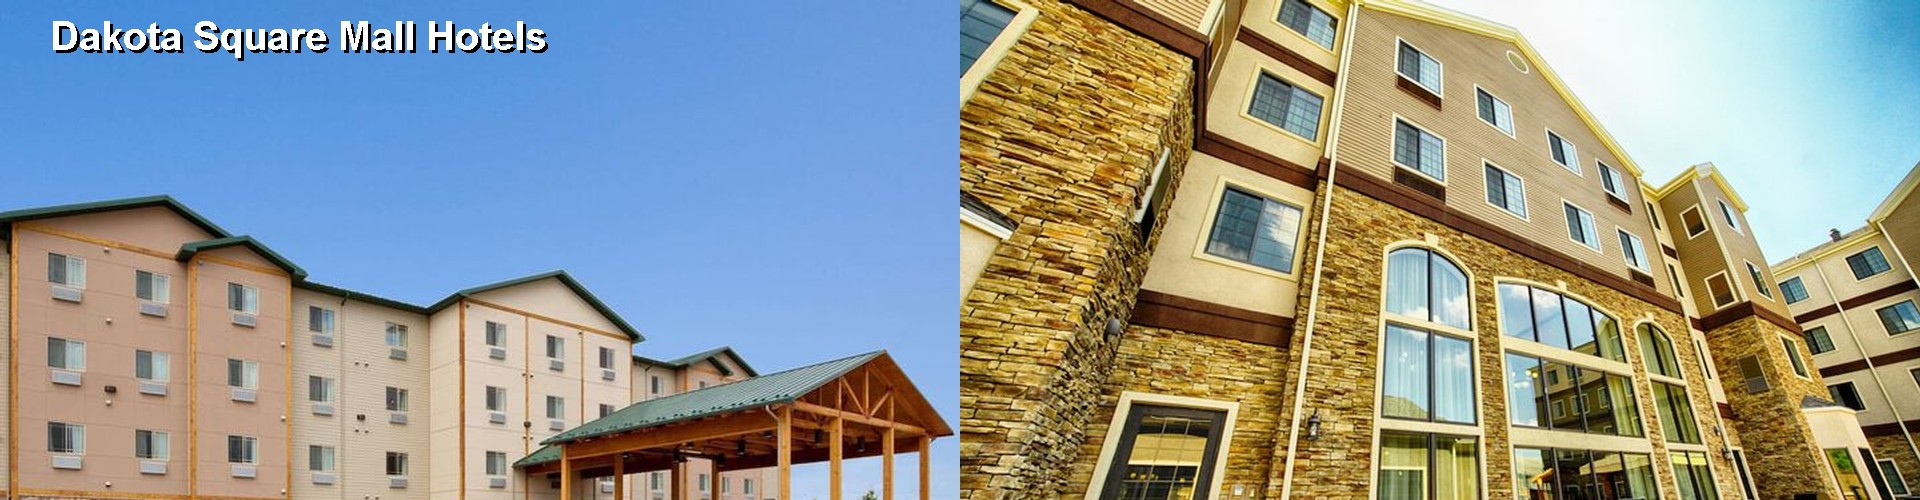 5 Best Hotels near Dakota Square Mall